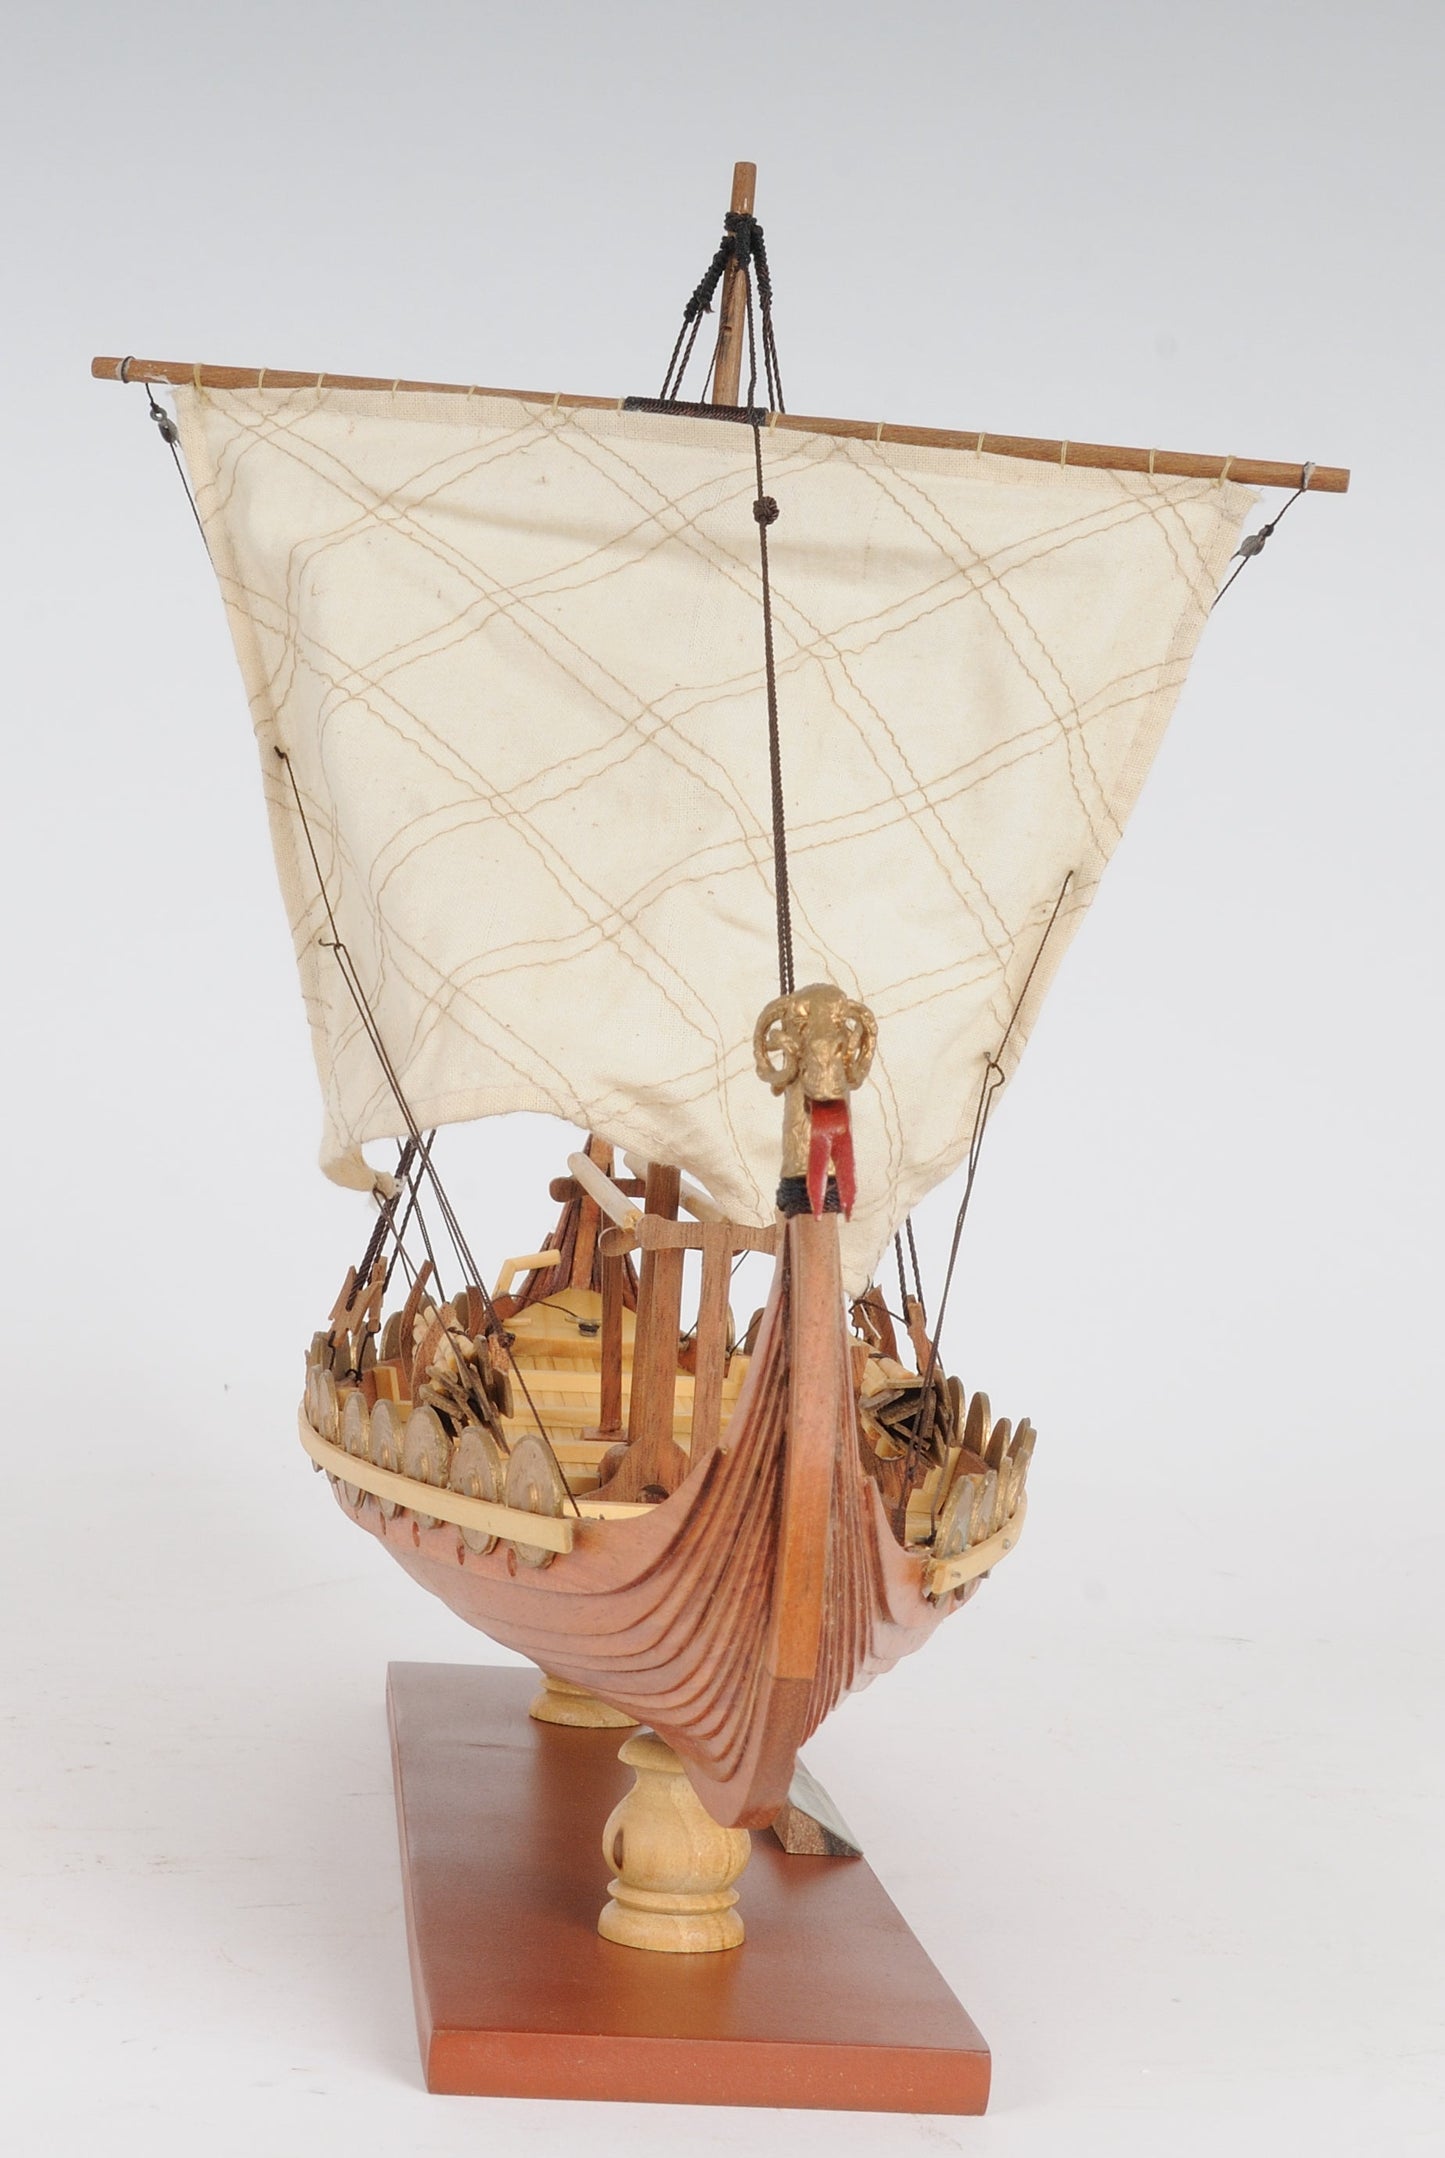 ALDO Hobbies & Creative Arts> Collectibles> Scale Model L: 15 W: 9 H: 12.5 Inches / NEW / wood Drakkar Viking Longshan Historic Replica Wood Small Model Sailboat Assembled